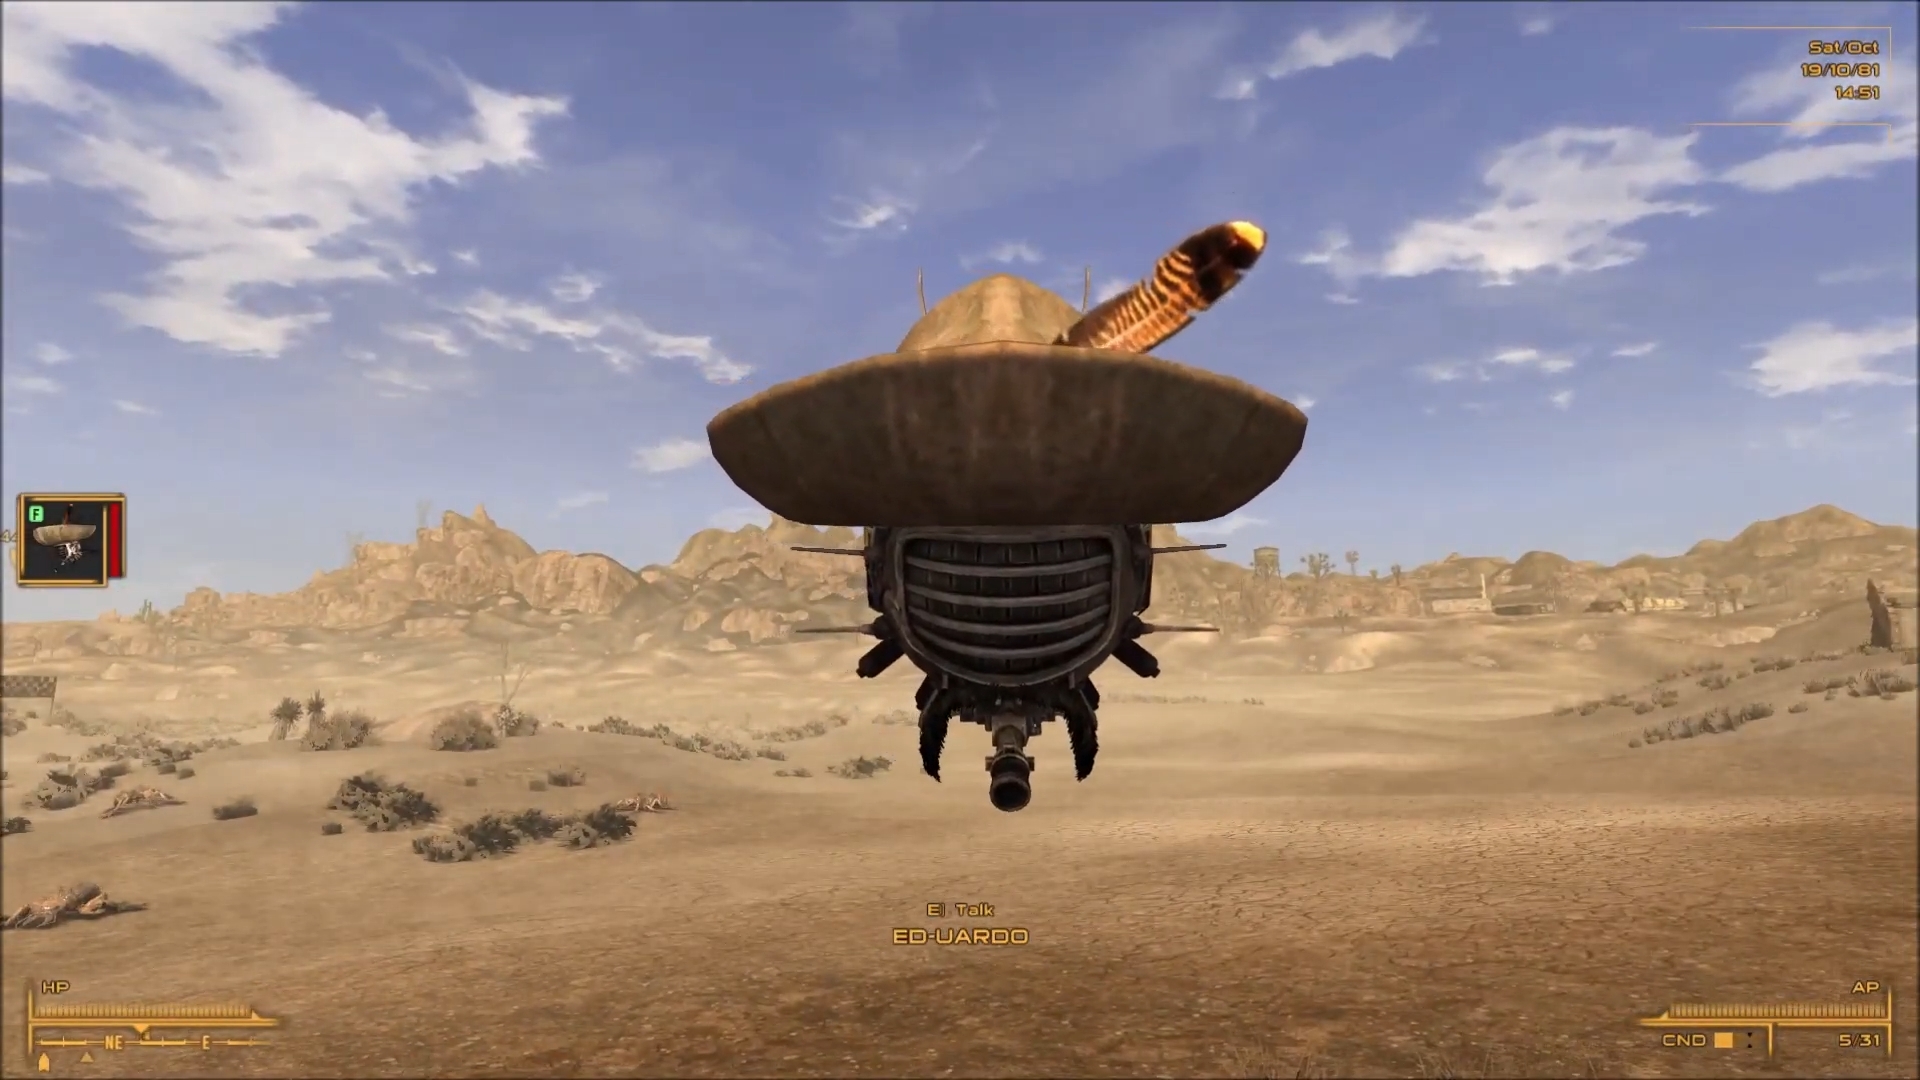  Fallout: New Vegas mod gives your eyebot companion an upgradeable sombrero, mustache 